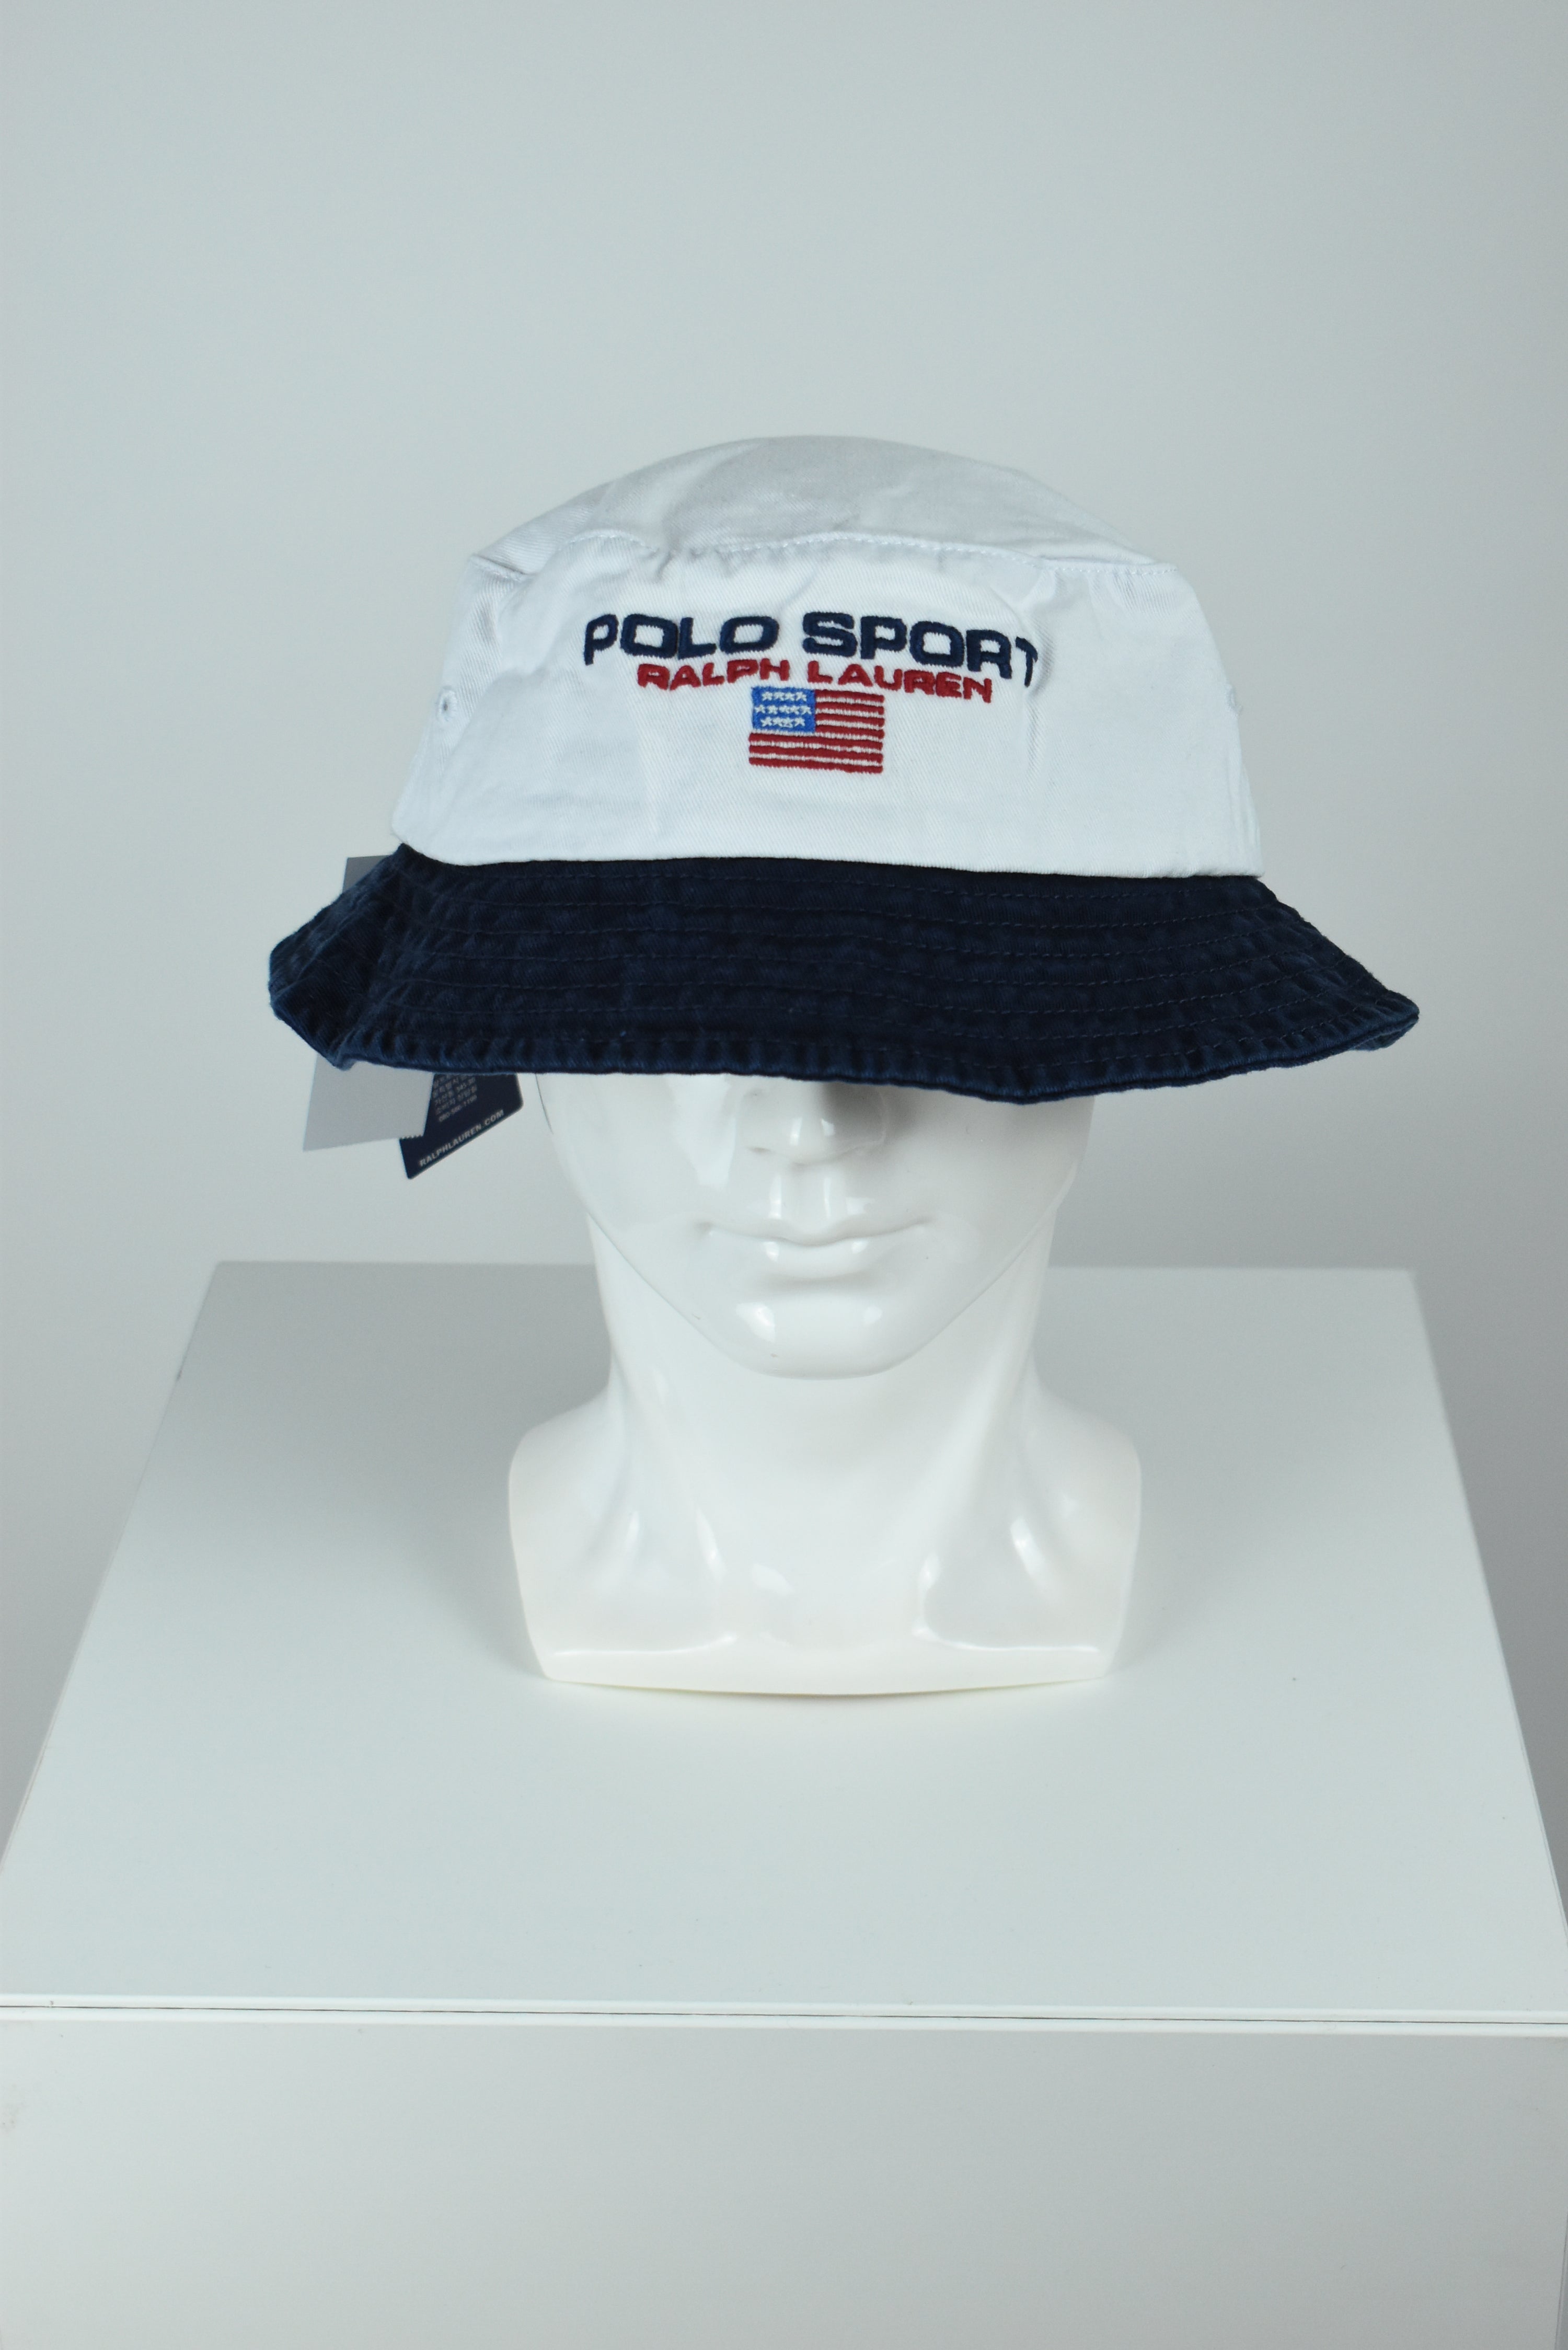 New Ralph Lauren Polo Sport Bucket Hat White/Navy OS